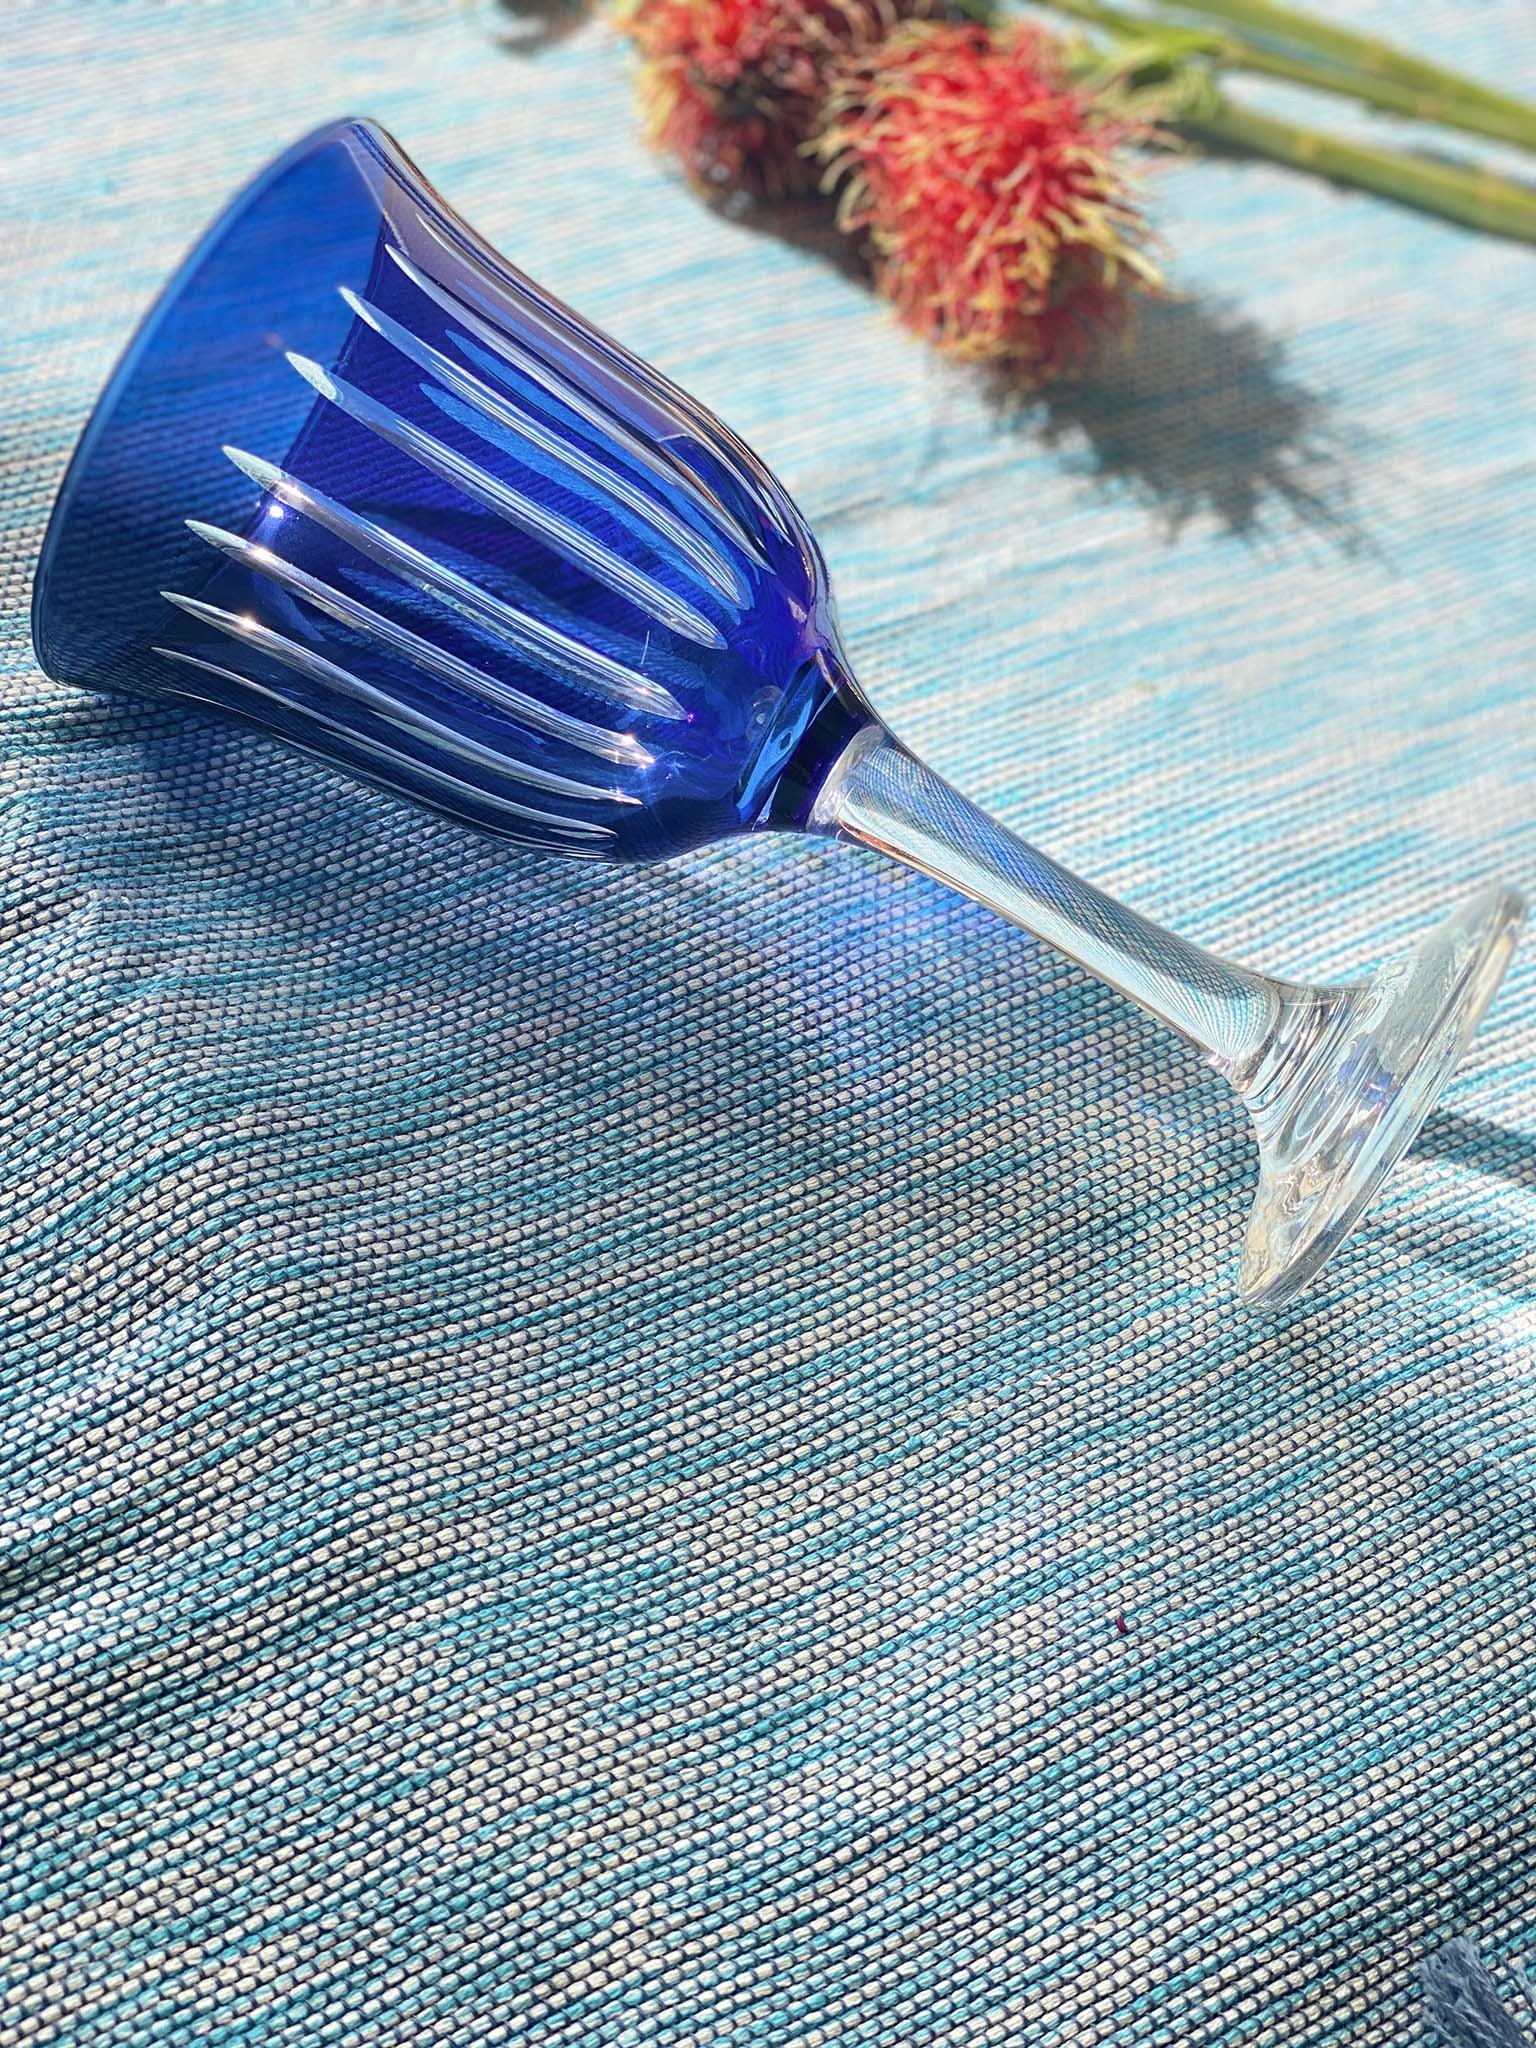 https://www.scentsandfeel.com/wp-content/uploads/2022/01/SET-OF-6-WINE-GLASSES-BLUE.jpg